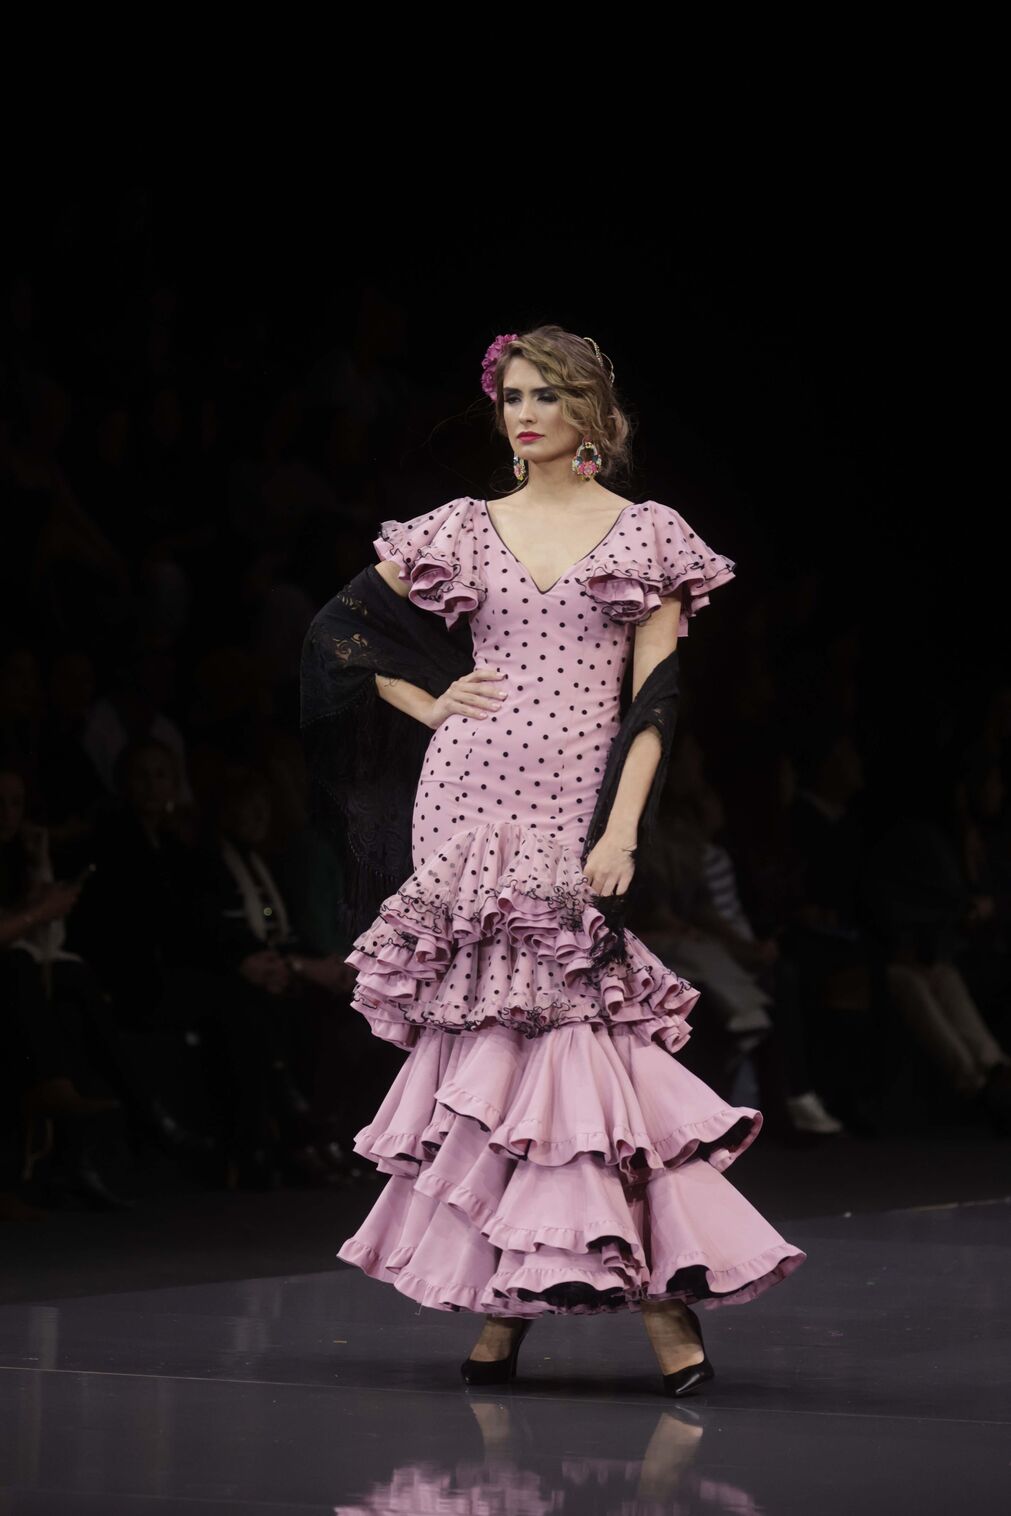 Maricruz Montecarlo - Moda flamenca